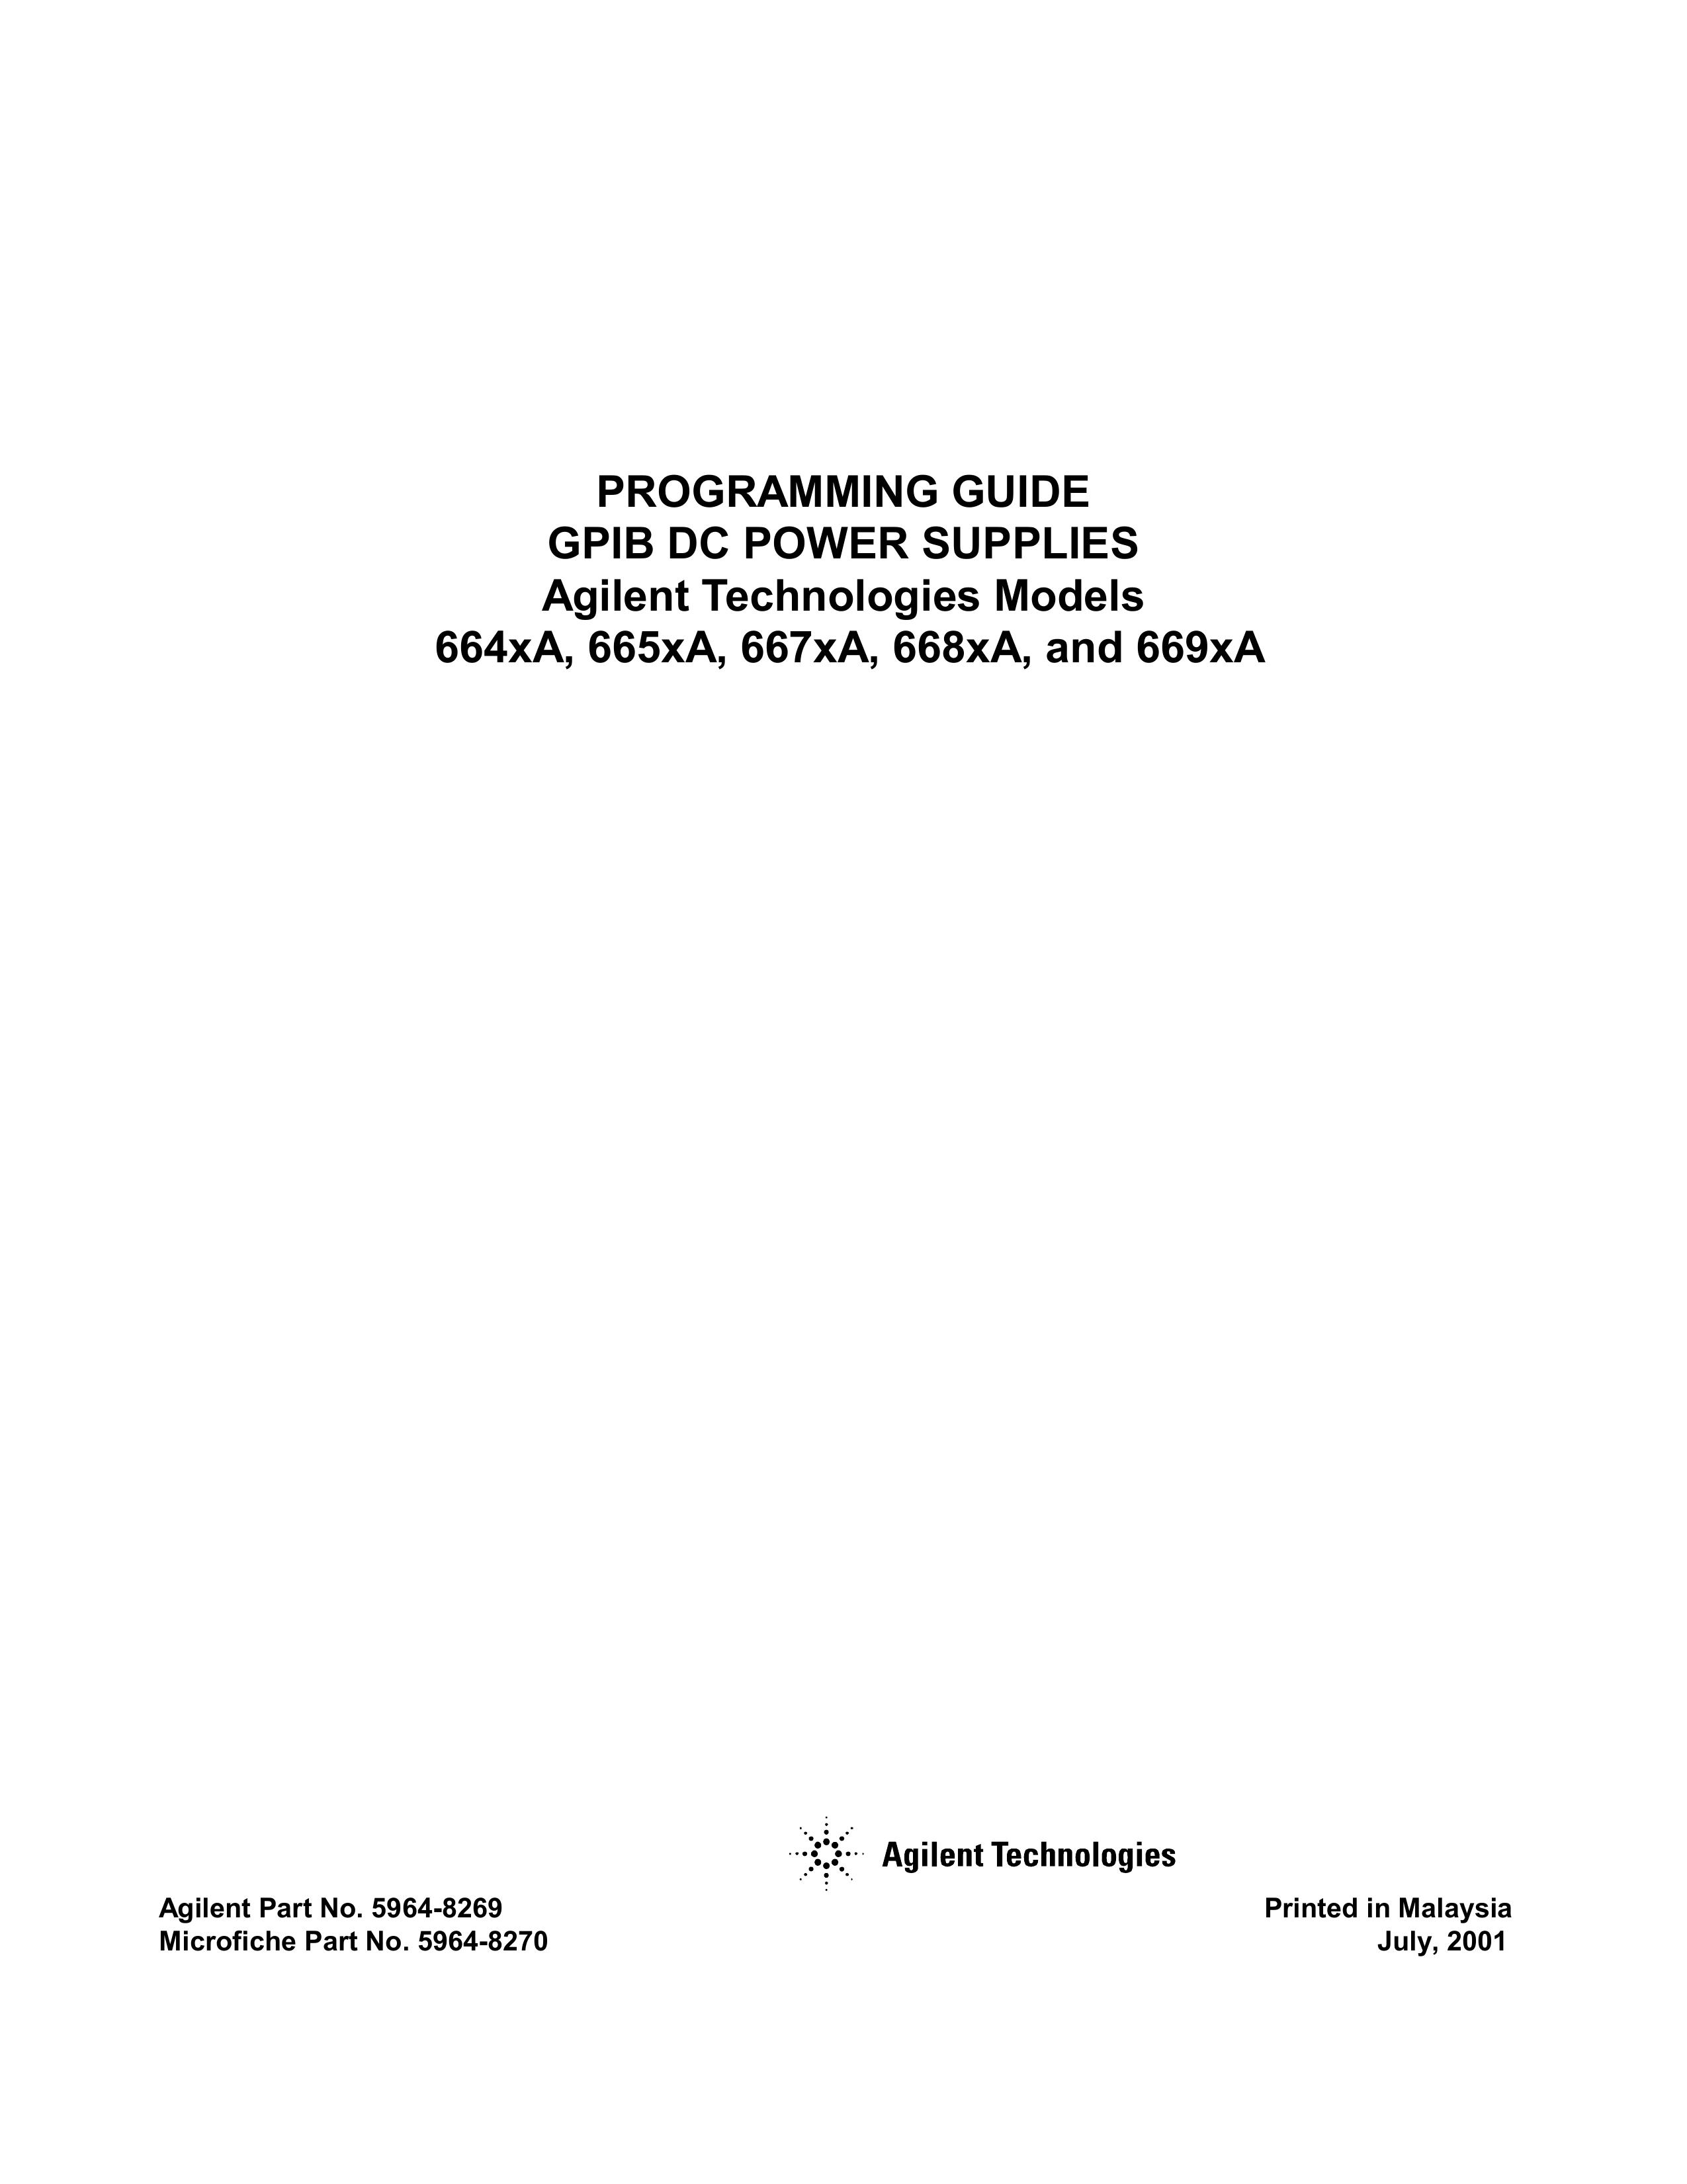 Agilent Technologies 668xA Portable Generator User Manual